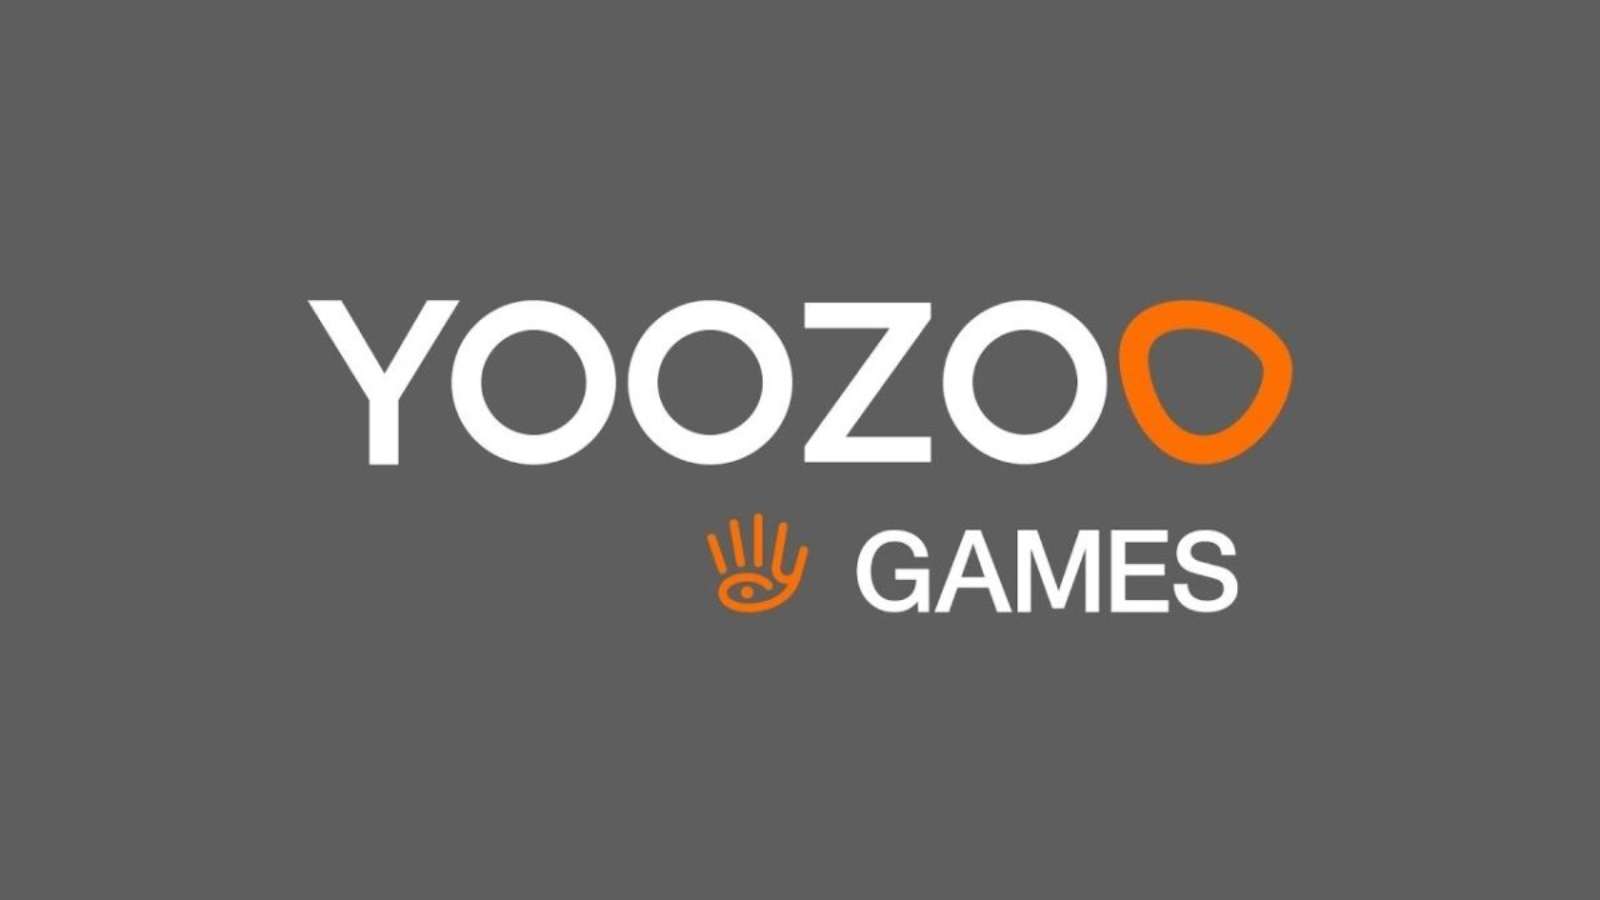 Yoozoo Games logo